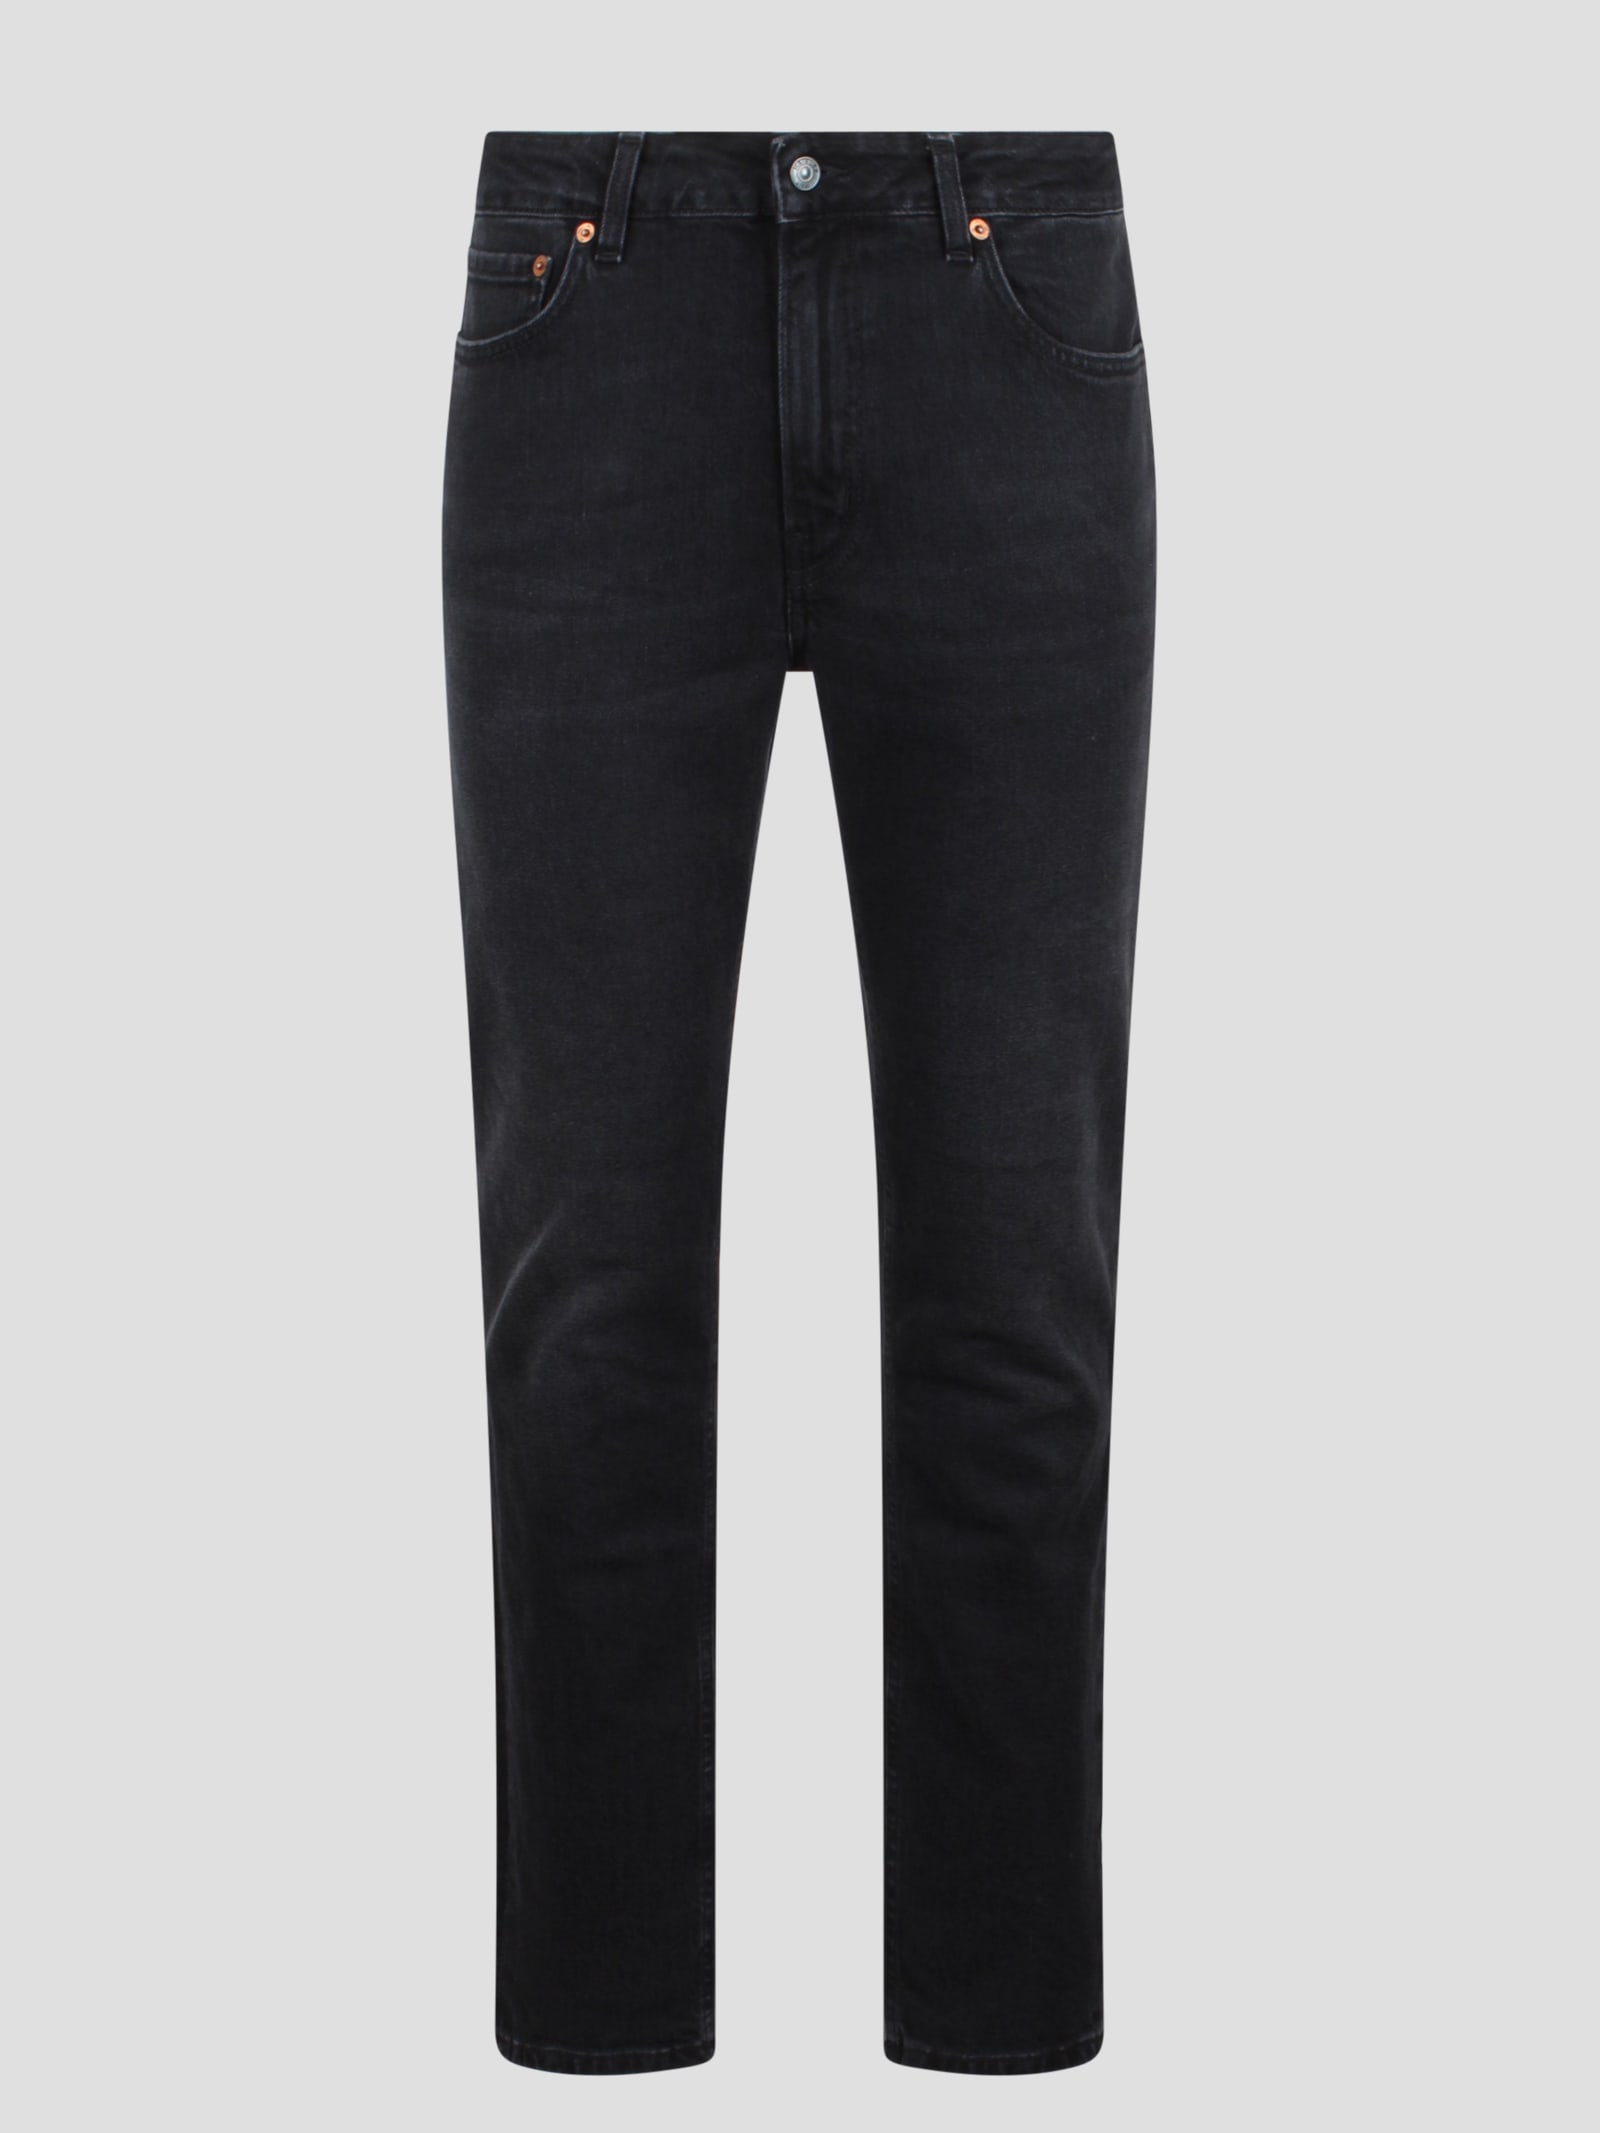 Cleveland Zip Soft Black Denim Jeans